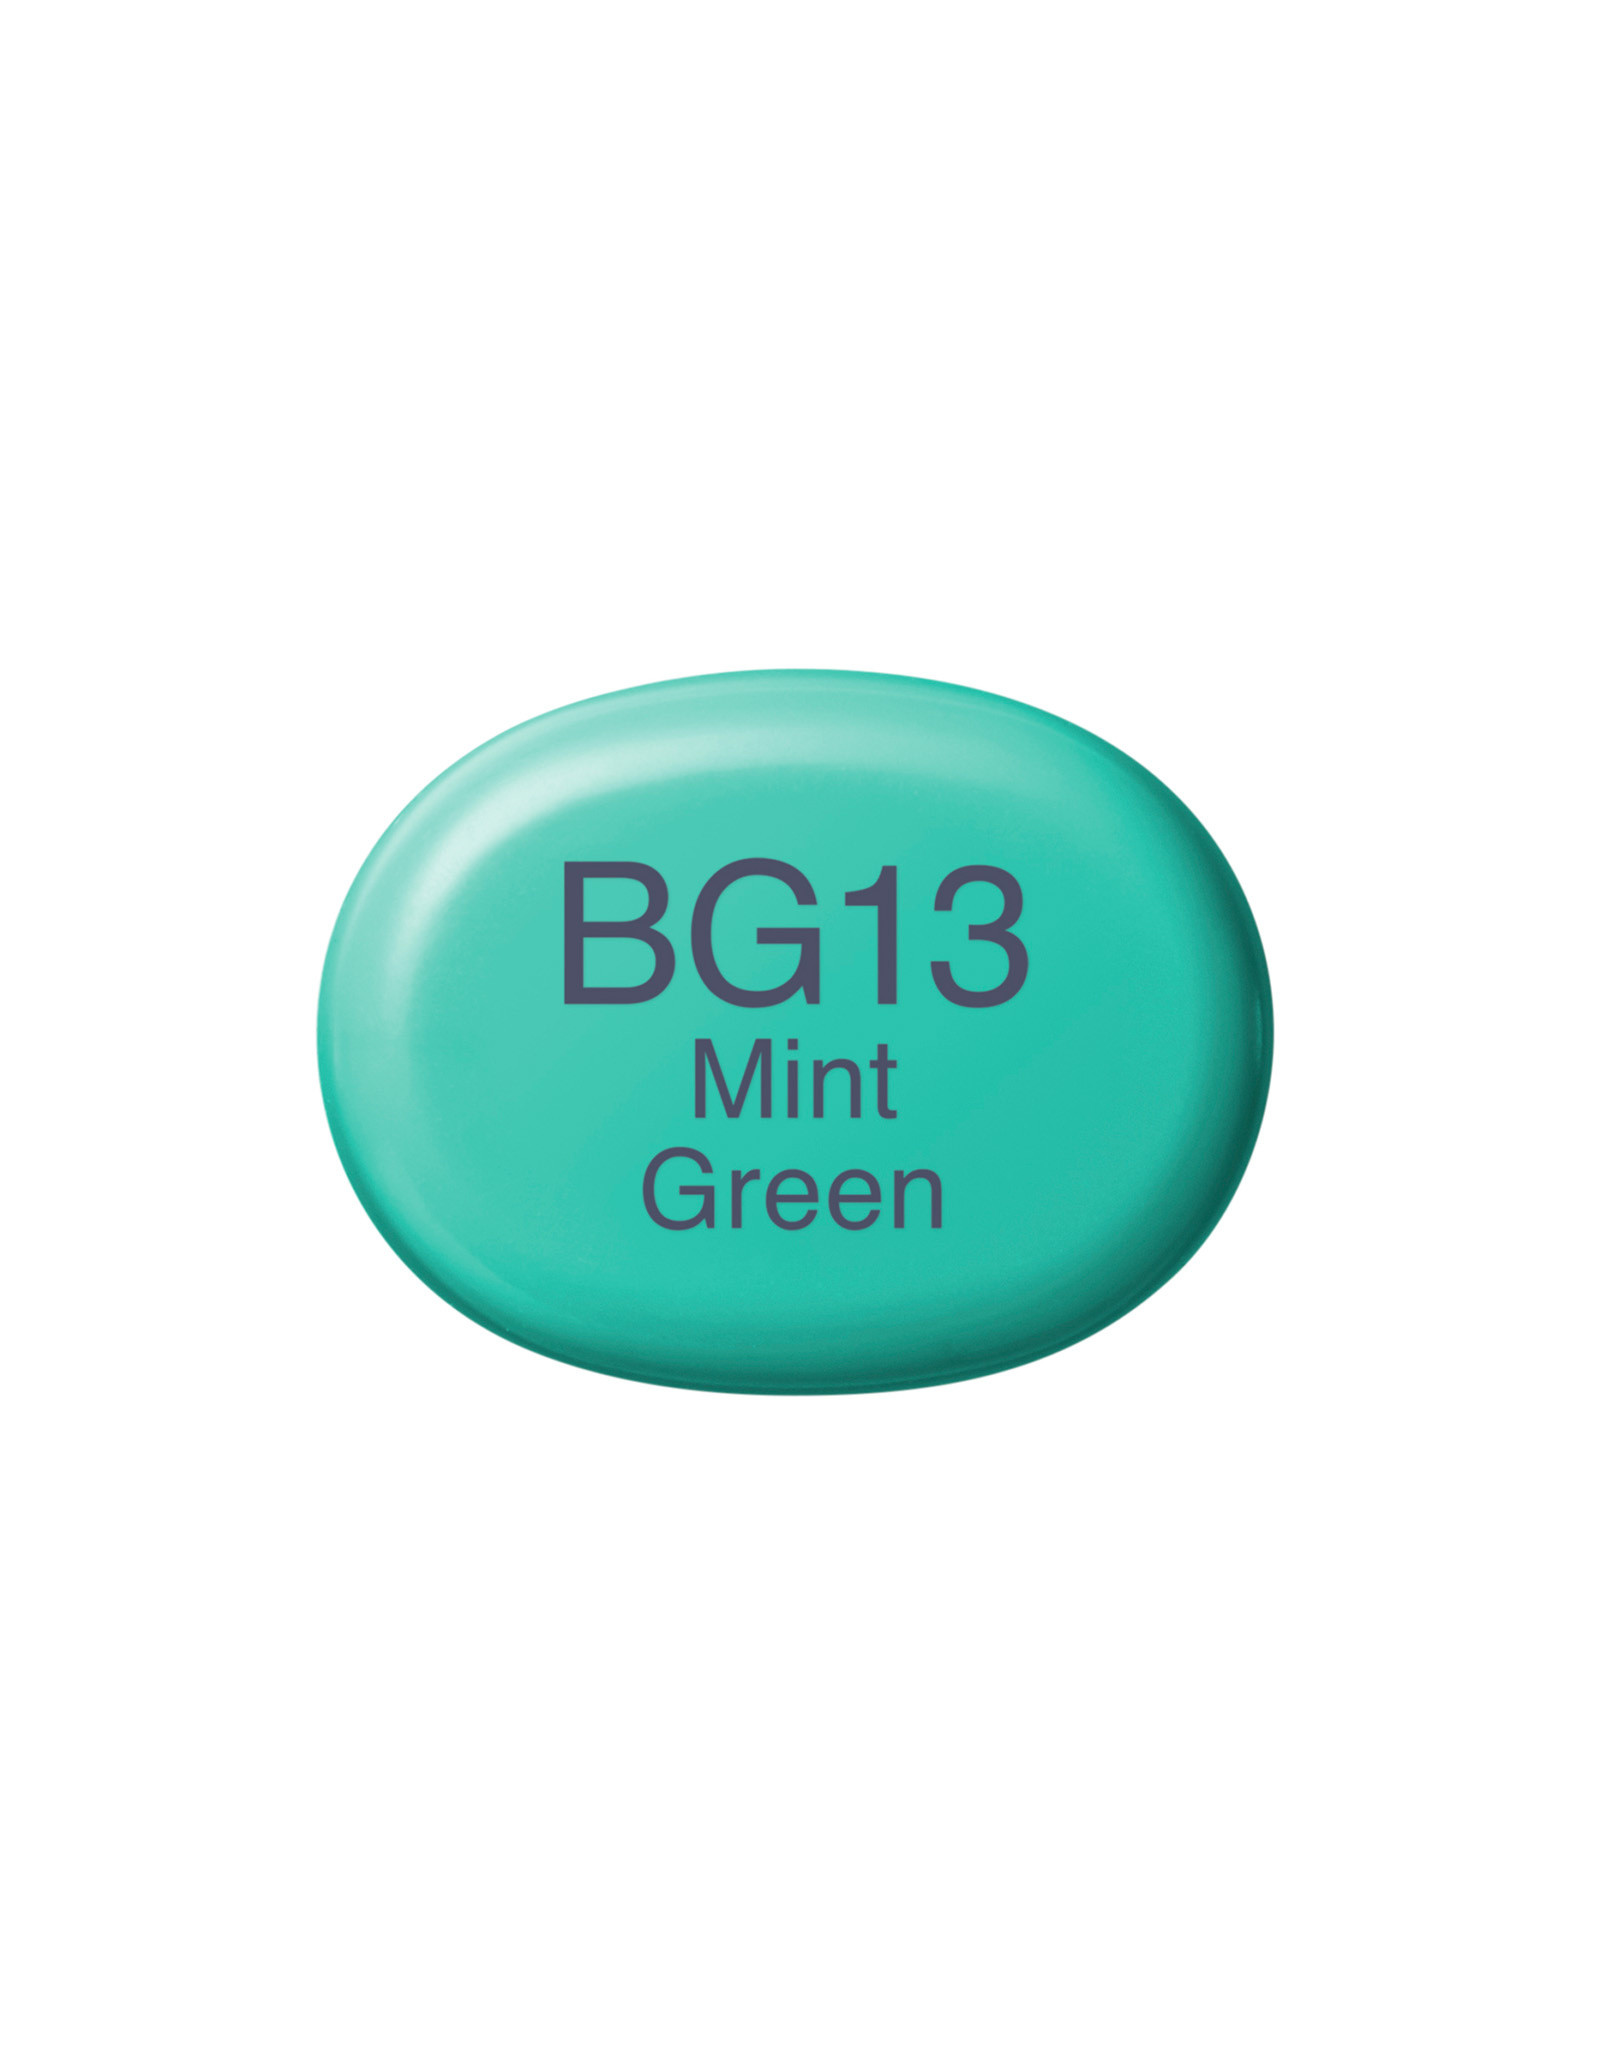 COPIC COPIC Sketch Marker BG13 Mint Green